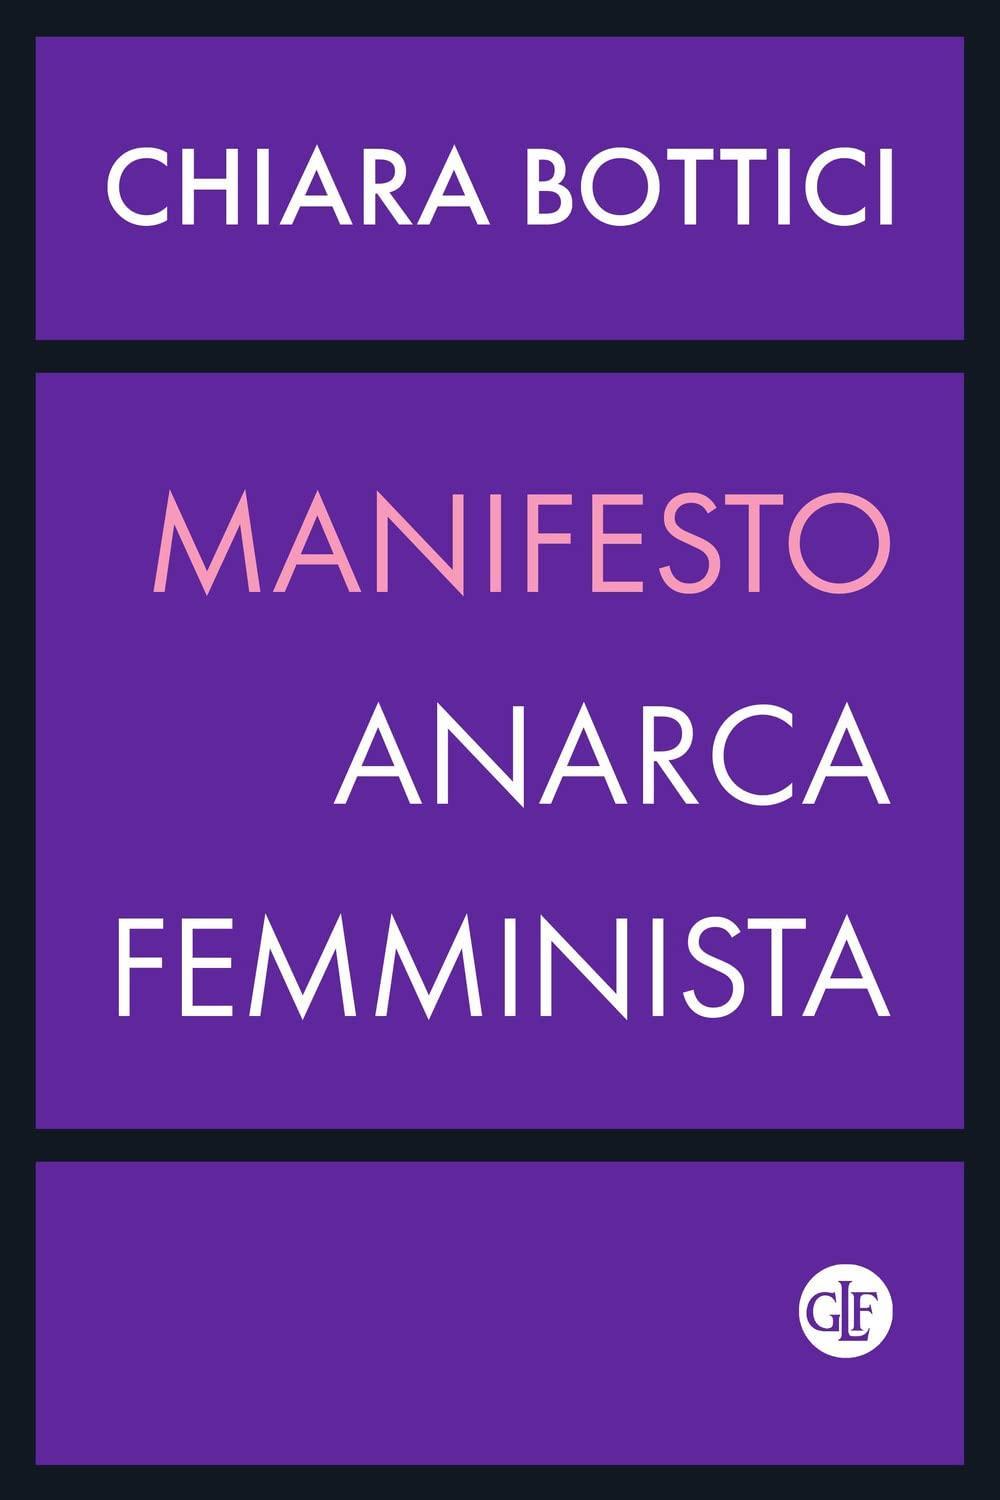 Chiara Bottici: Manifesto anarca-femminista (Italian language, 2022, Laterza)